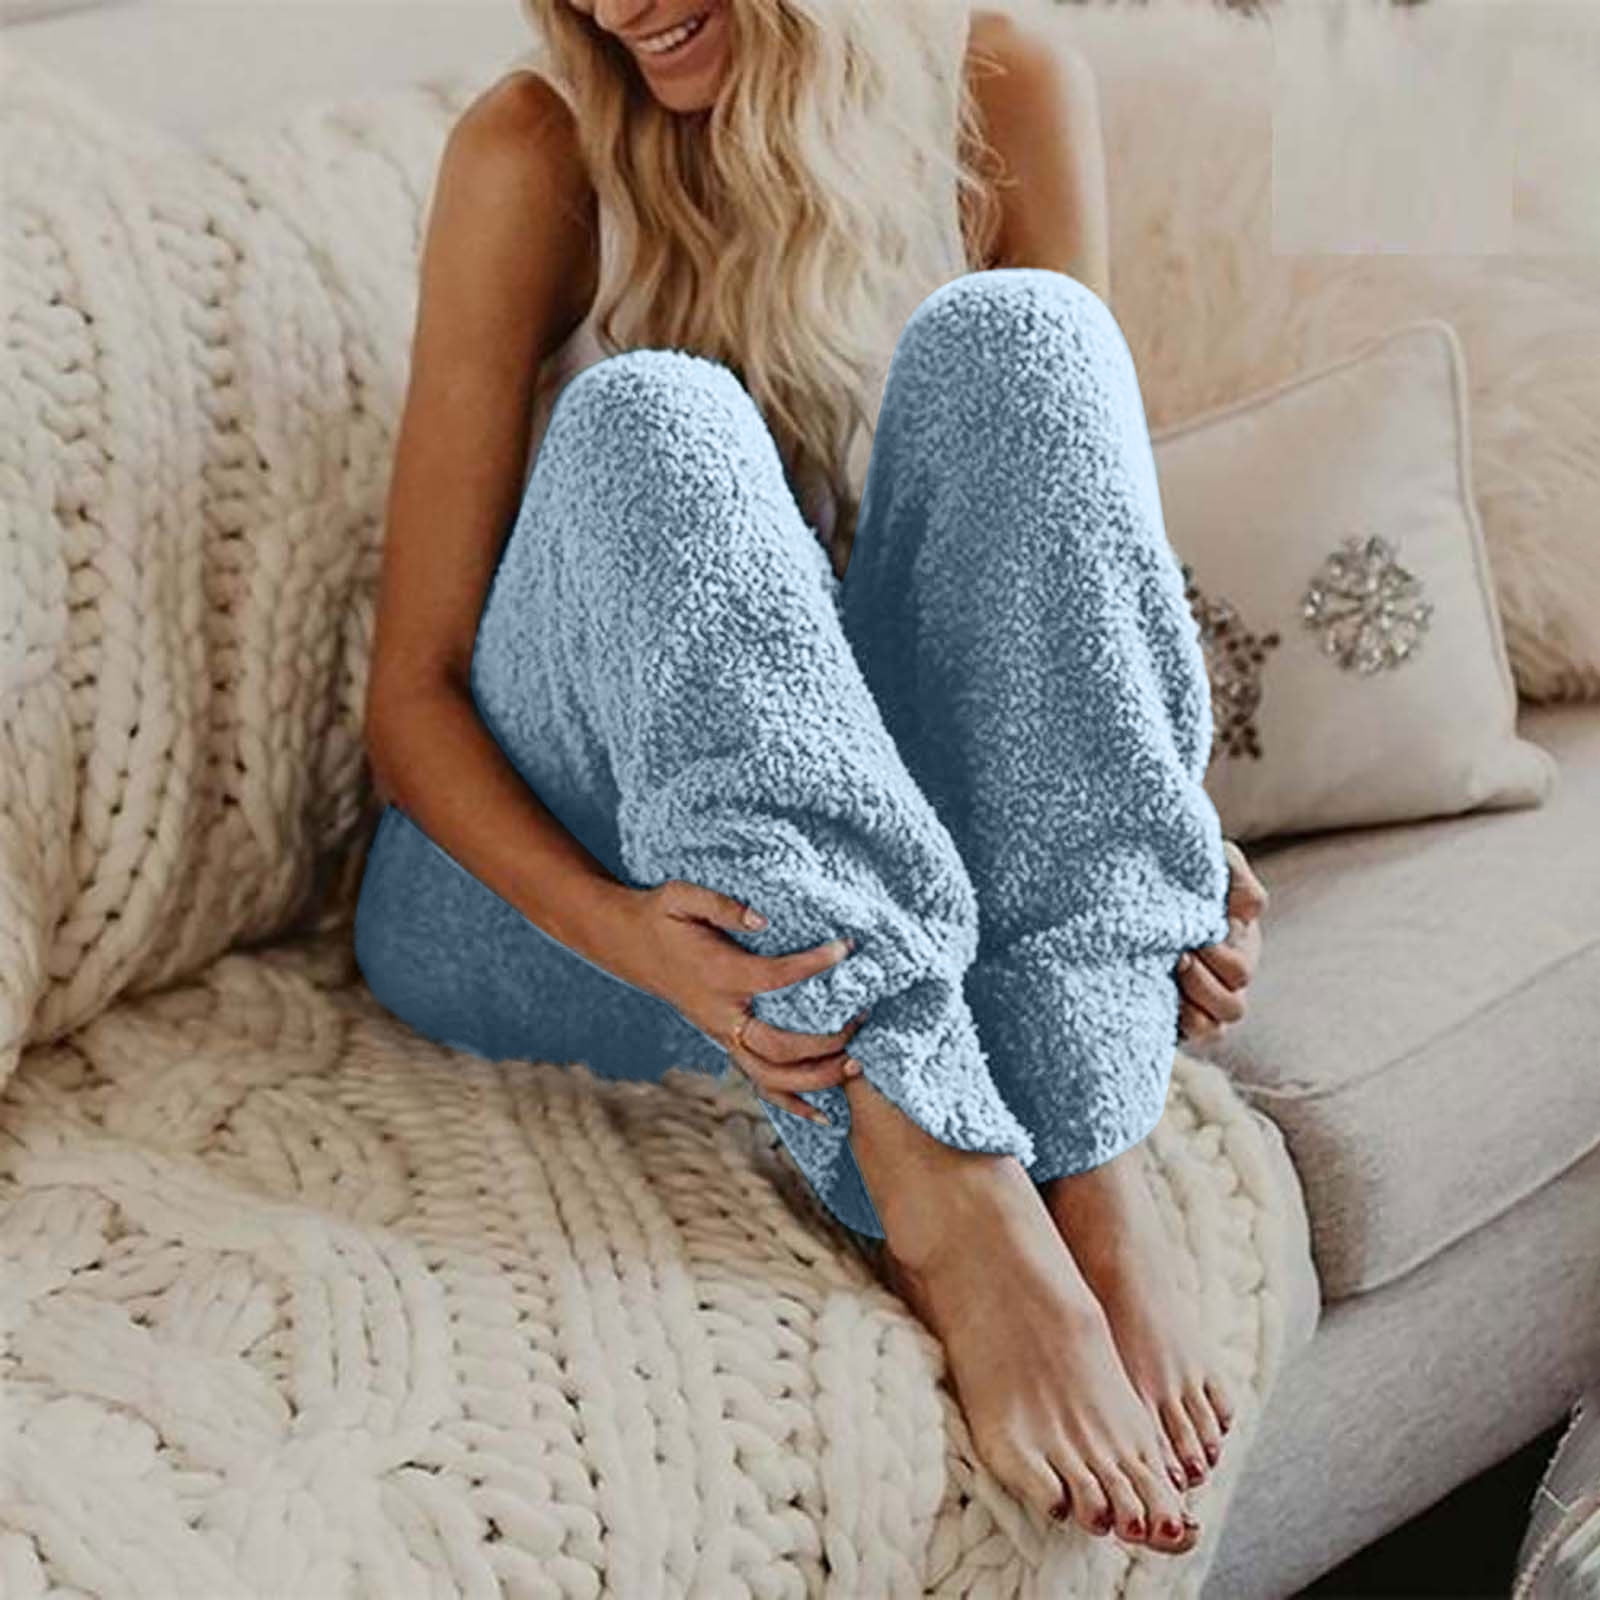 Ladies Soft Microfleece Lounge Pants / Warm Winter Pyjama / Pajama Bottoms  - S-XL